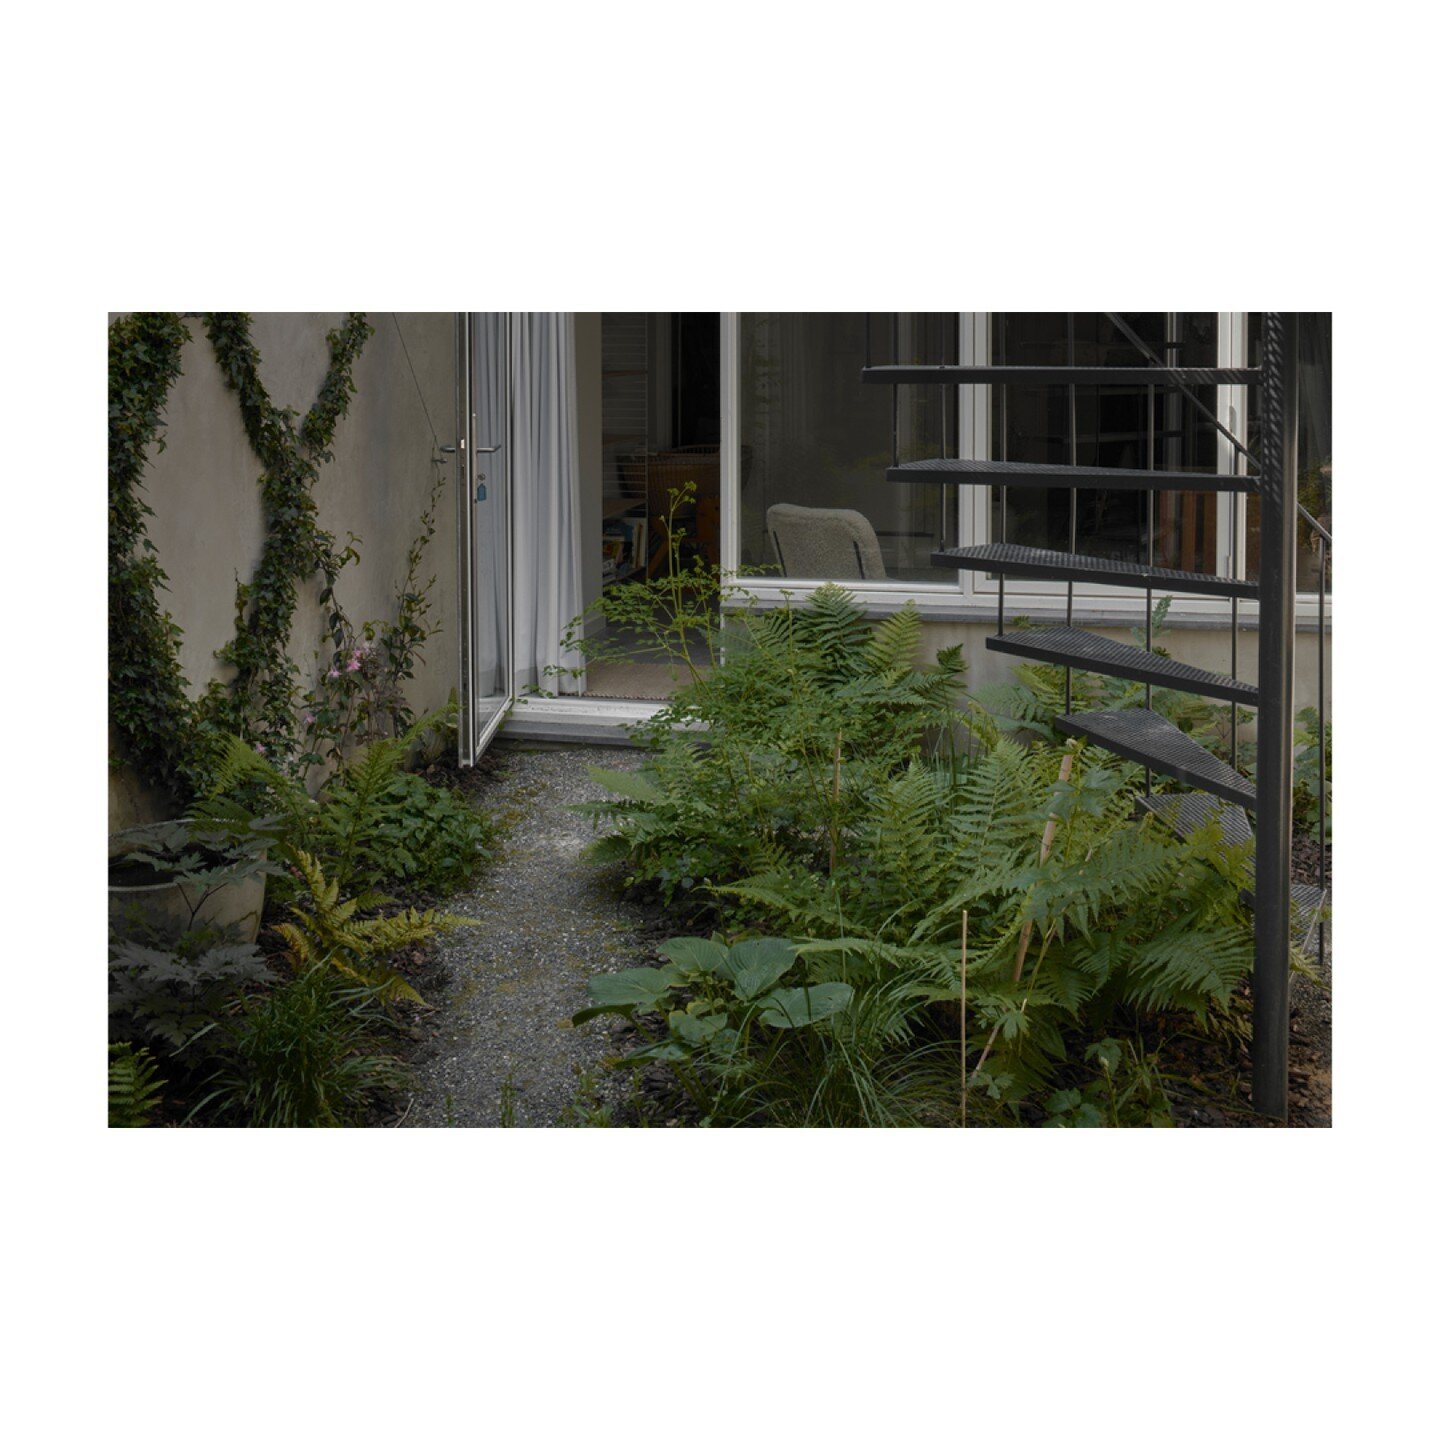 June 2023, Amsterdam, garden, shot for @rademacher_devries
.
.
.
.
#architecture #photography #architecturephotography  #wood #building #arch #plant #grass #shrub #landscape #facade #room #apartment #condominium #curtain #yard #handrail #plants